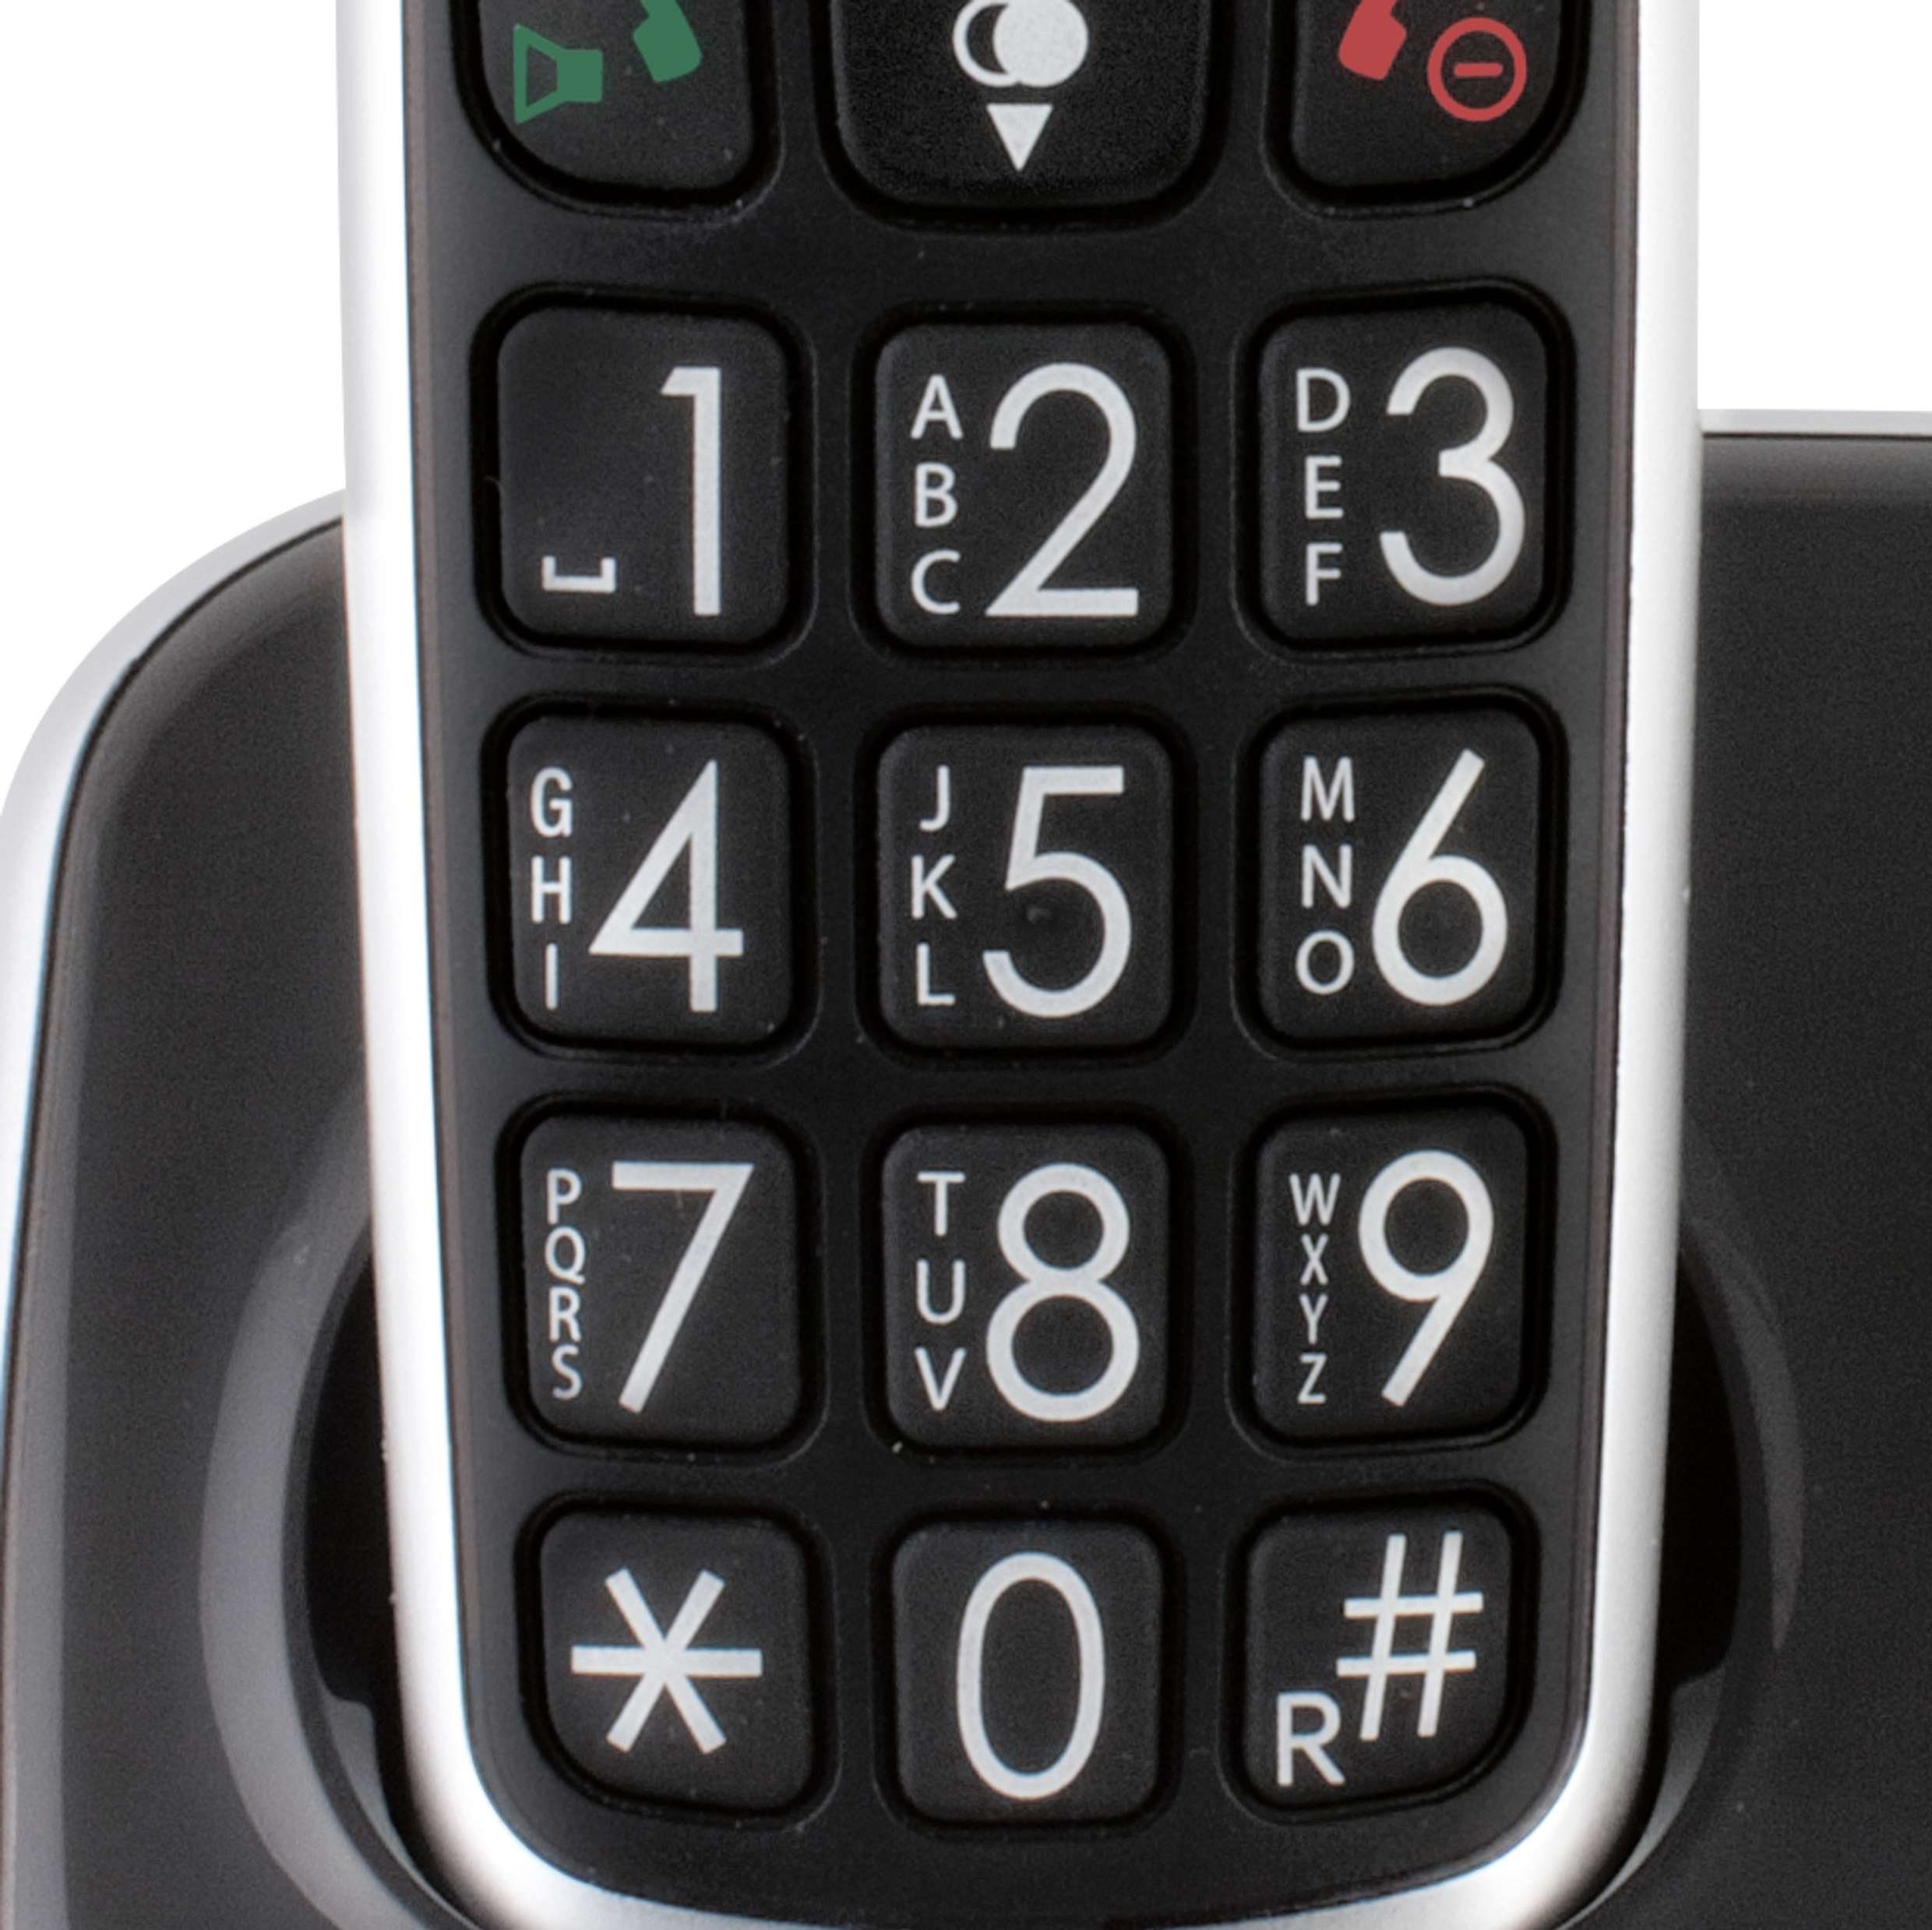 großes Schnurloses DECT-Telefon große Display) FX-6020 (Mobilteile: Fysic Tasten, Hörgerätkompatibel, 2,